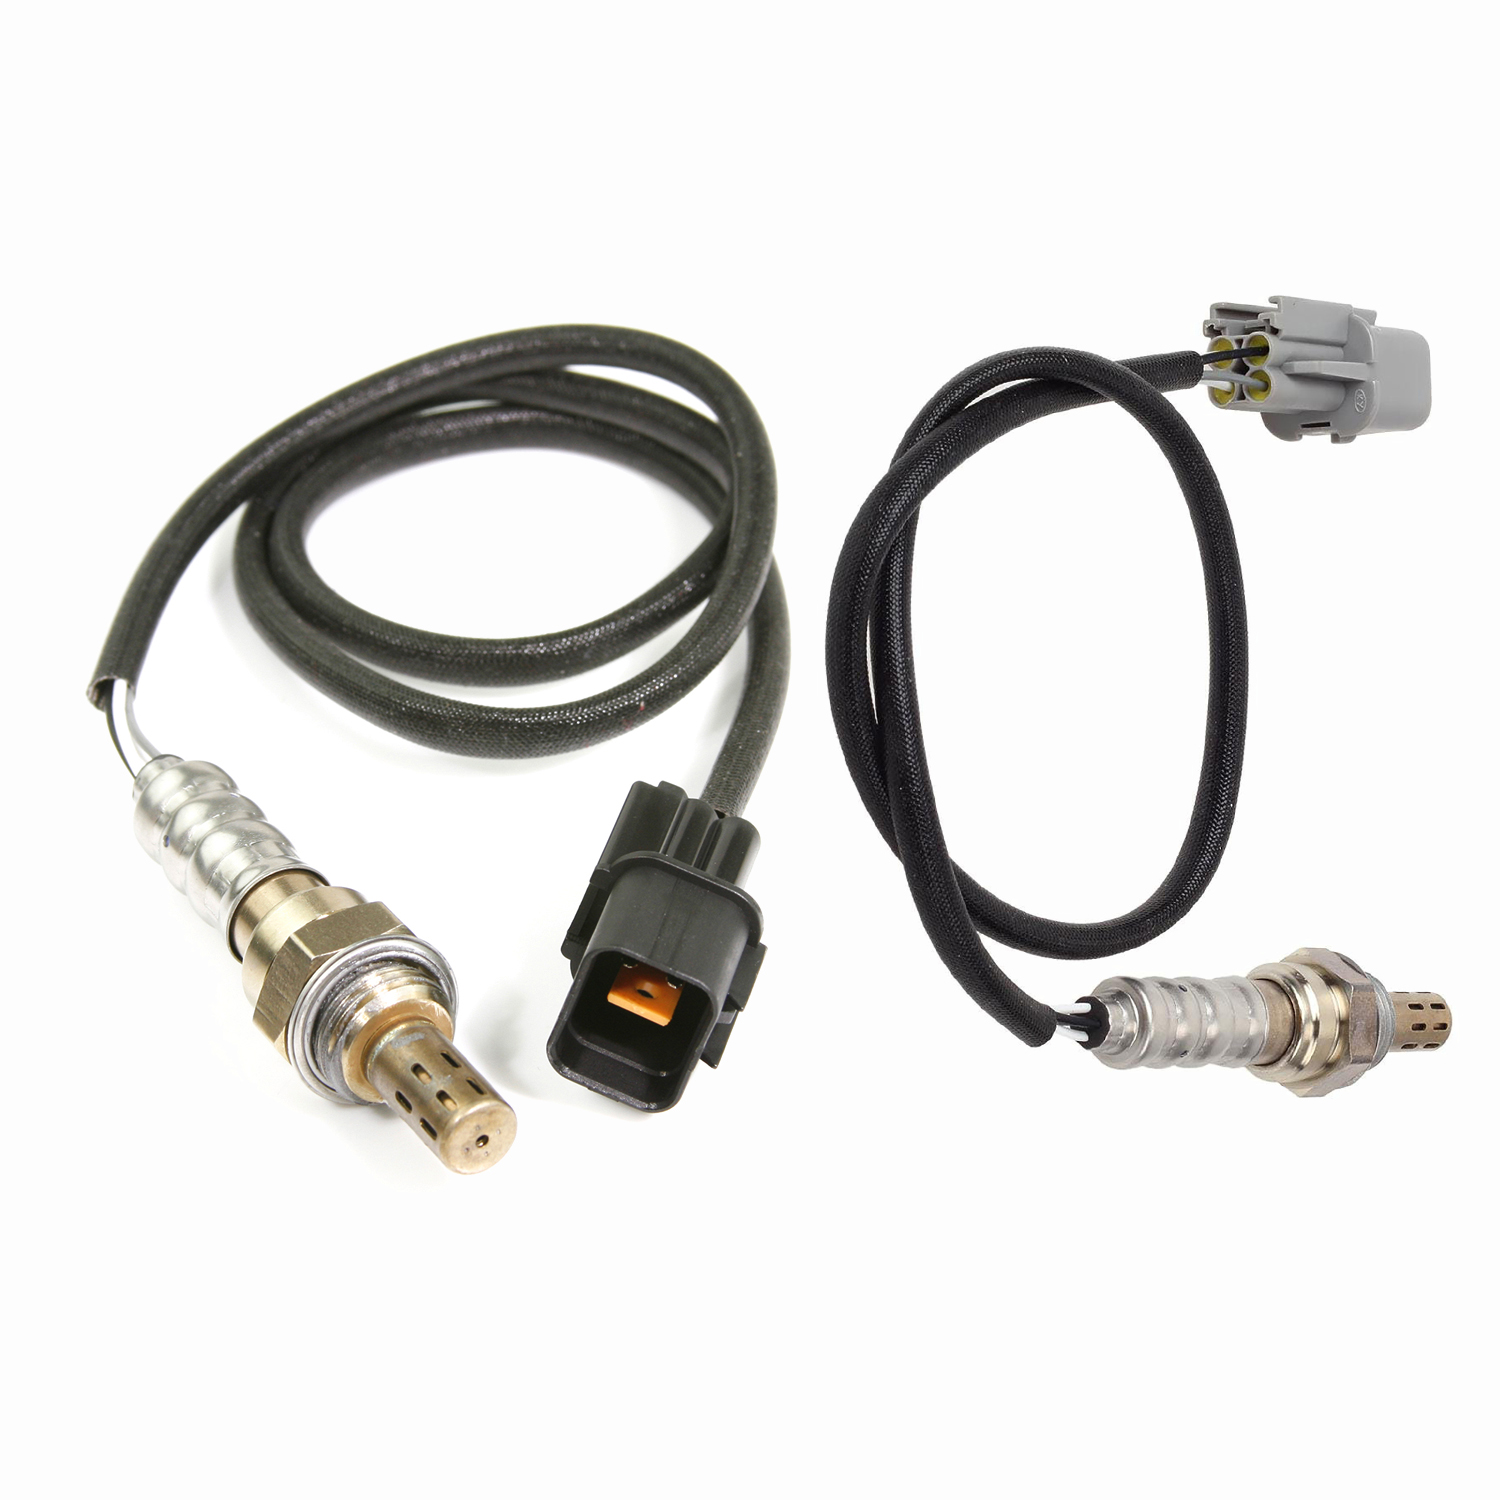 Downstream O2 Oxygen Sensor Fit for Chrysler Mitsubishi Eclipse 2Pcs Upstream